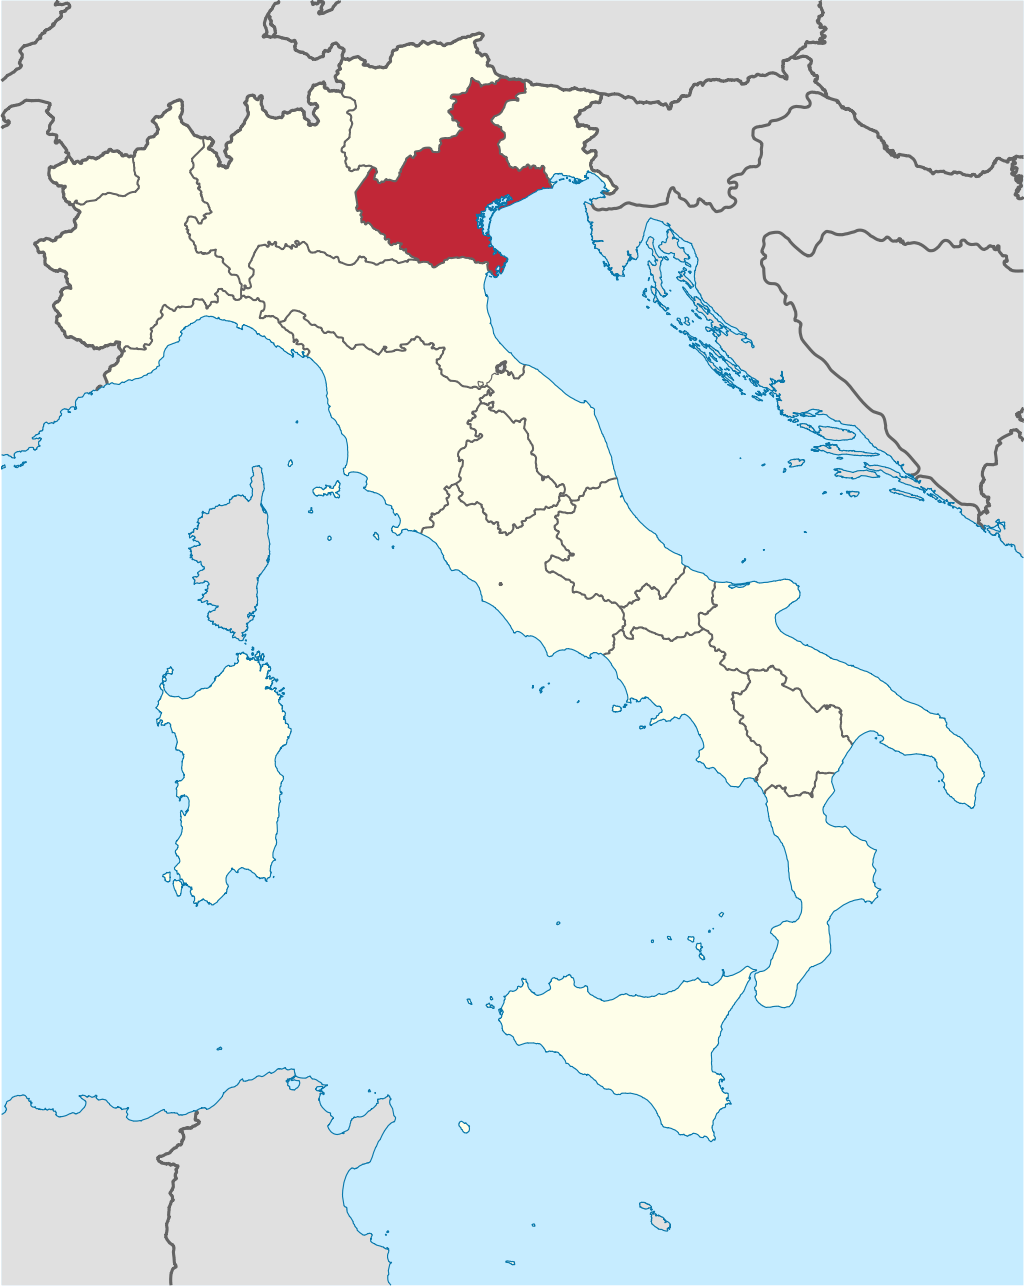 Alfred Ogwang Villa Urbex location or around the region Veneto (Vicenza), Italy